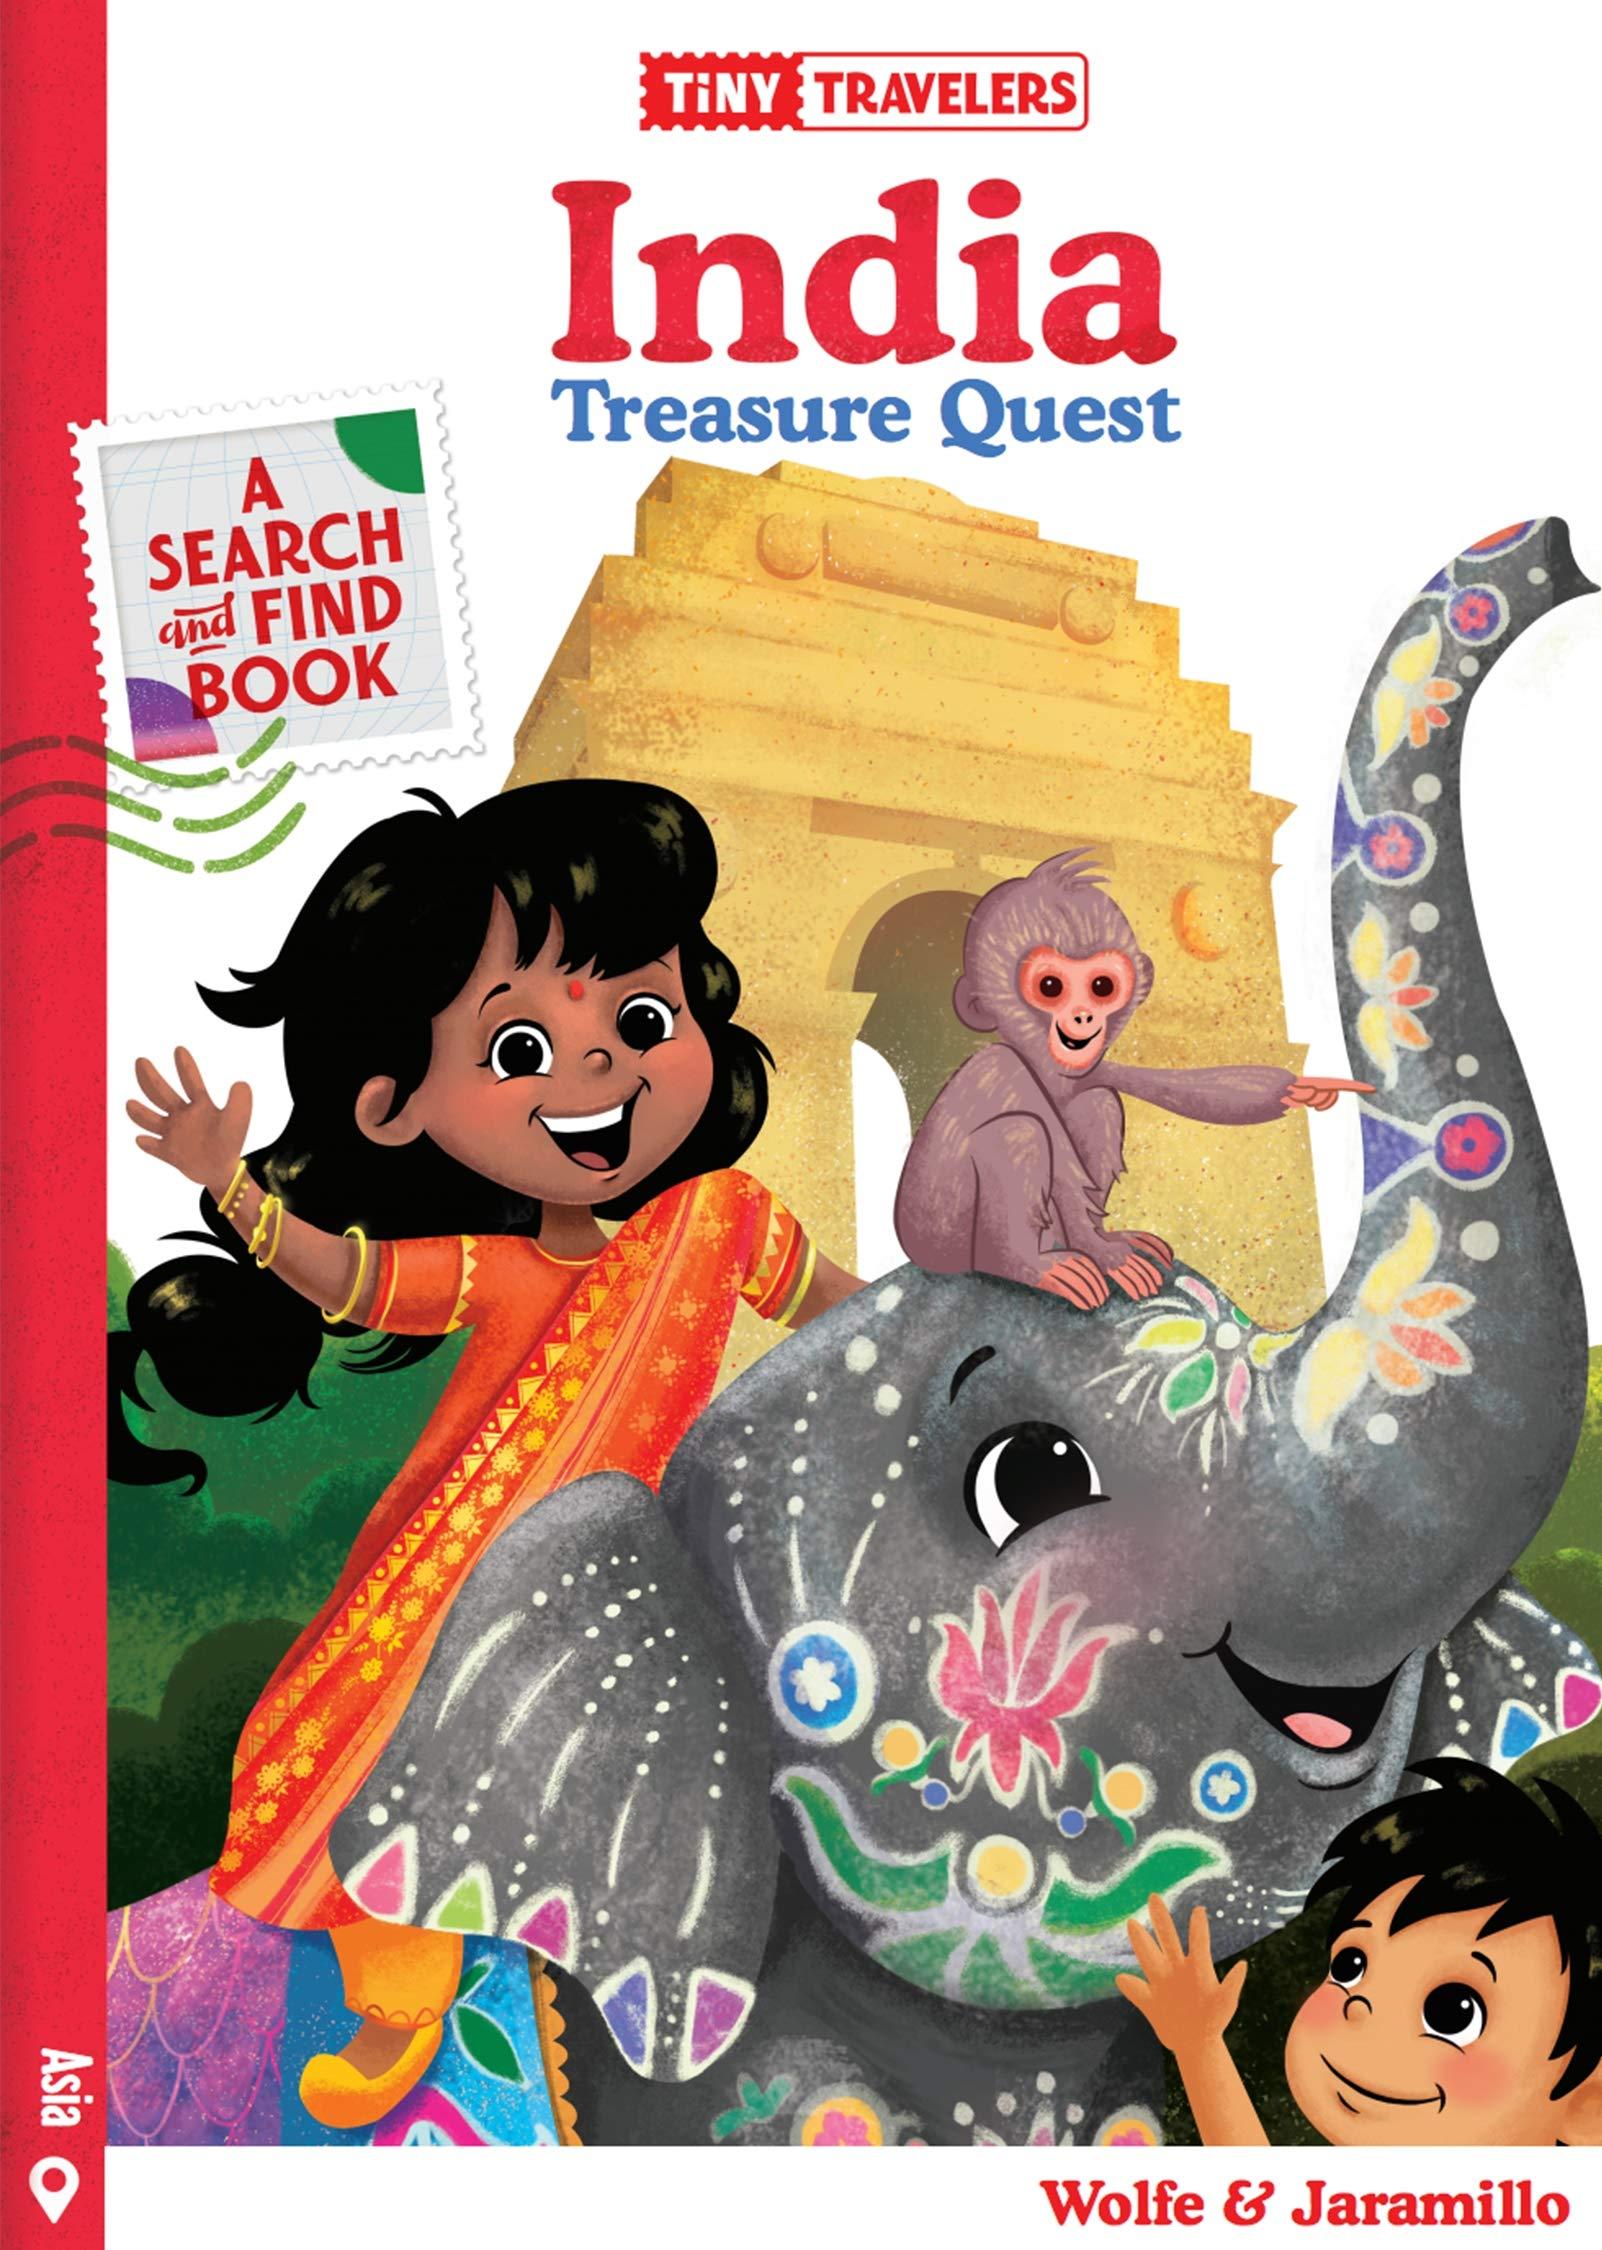 Tiny Travelers: India Treasure Quest